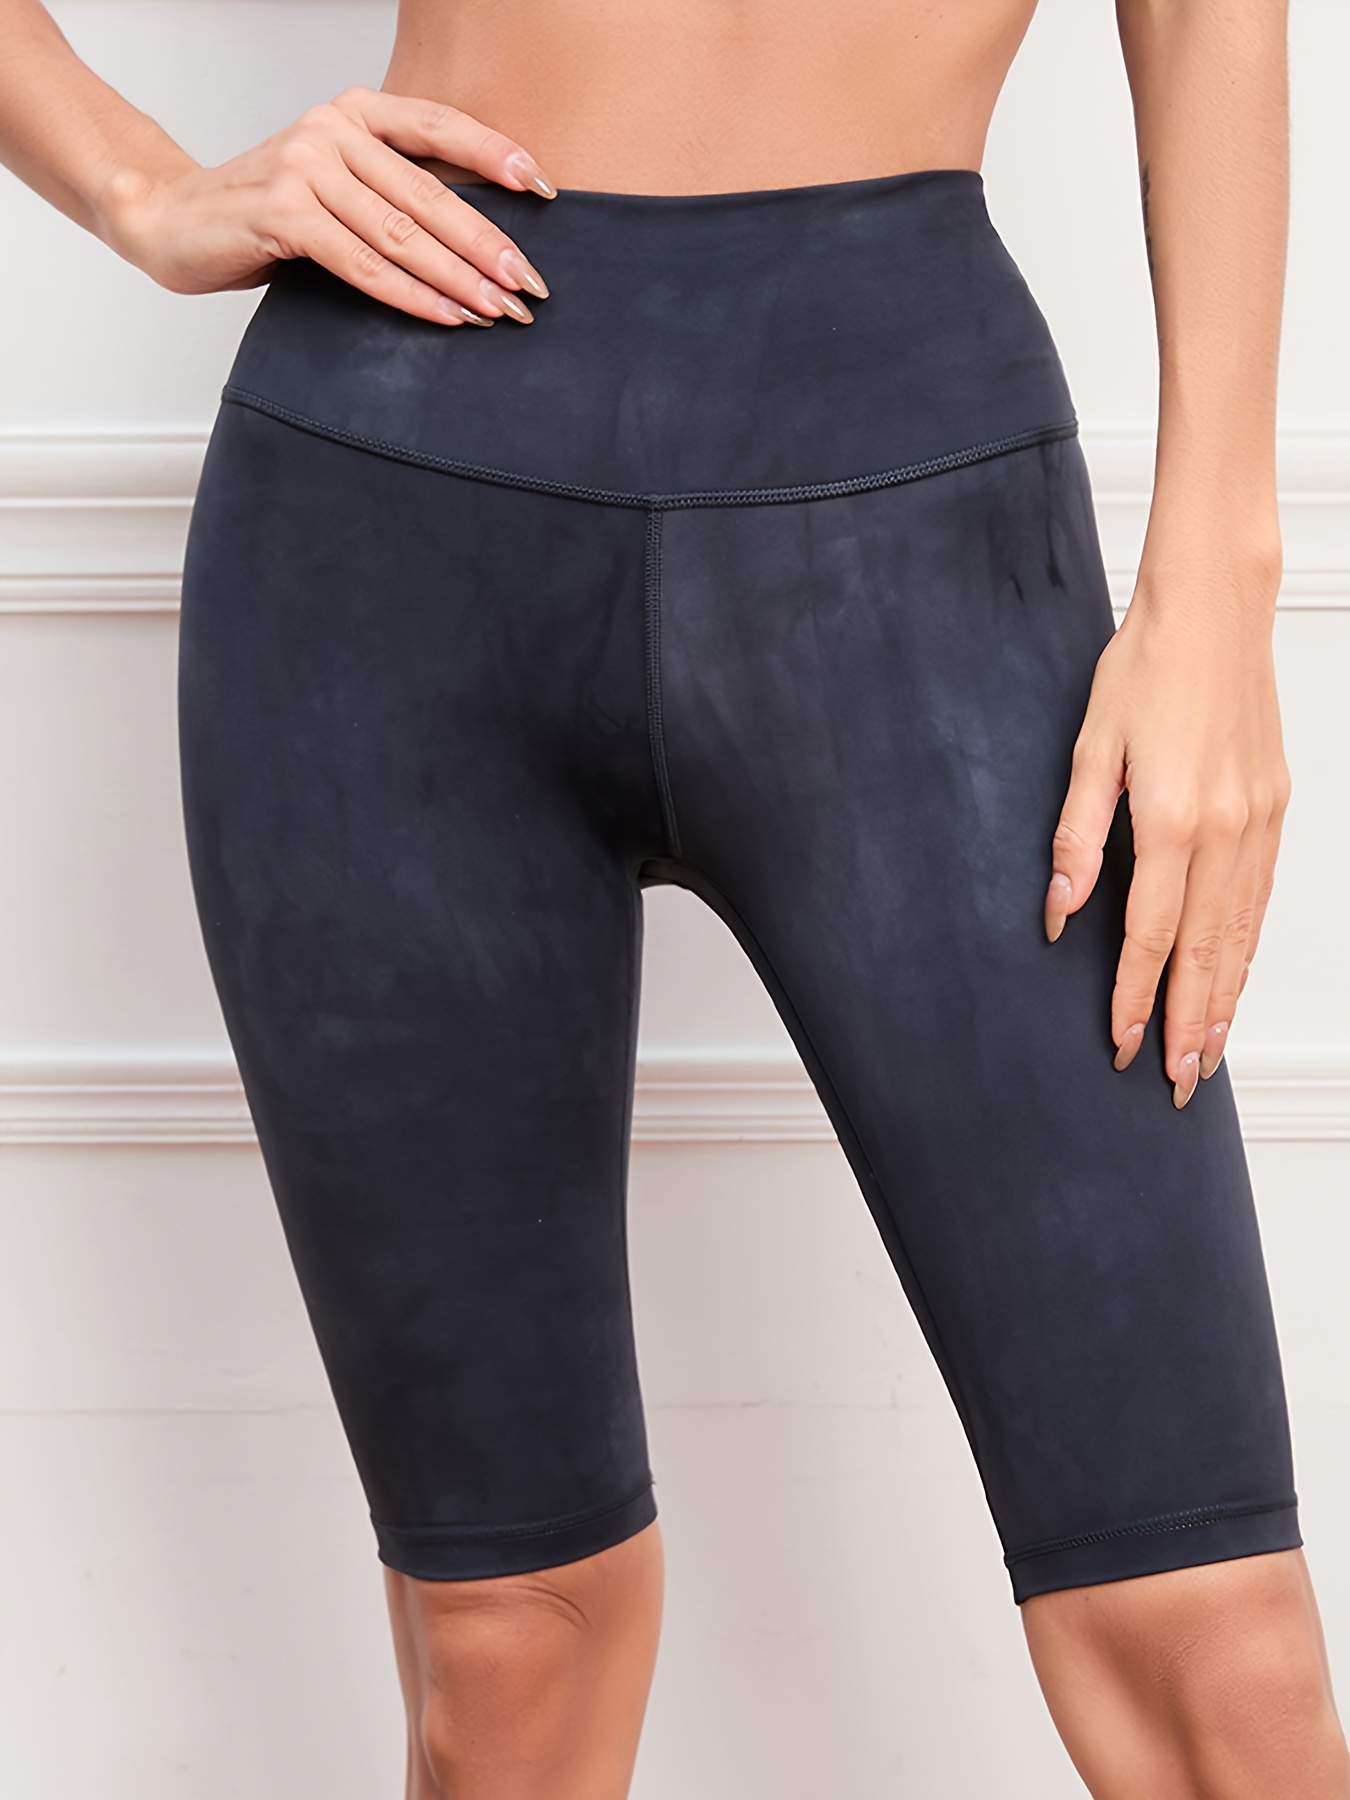 Womens Yoga Short Leggings Above The Knee Length High Waisted Tummy Control  Workout Shorts Stretchy Gym Pants (Medium, Black) 